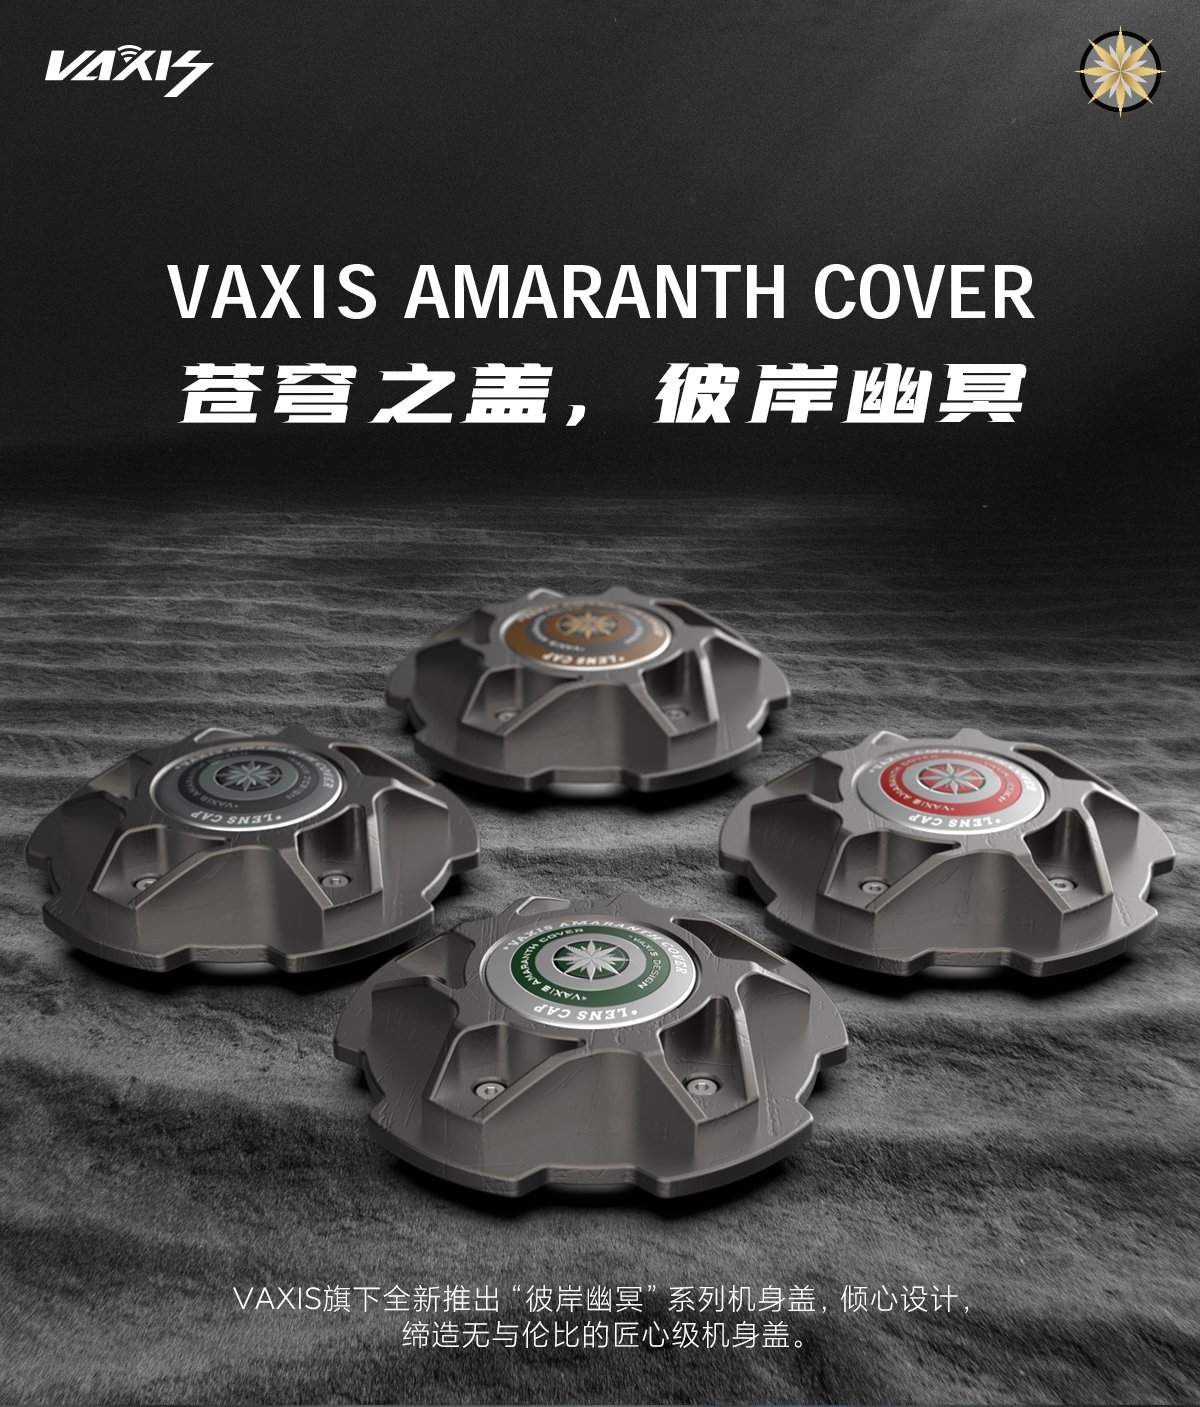 polaishop vaxis amaranth cover 1